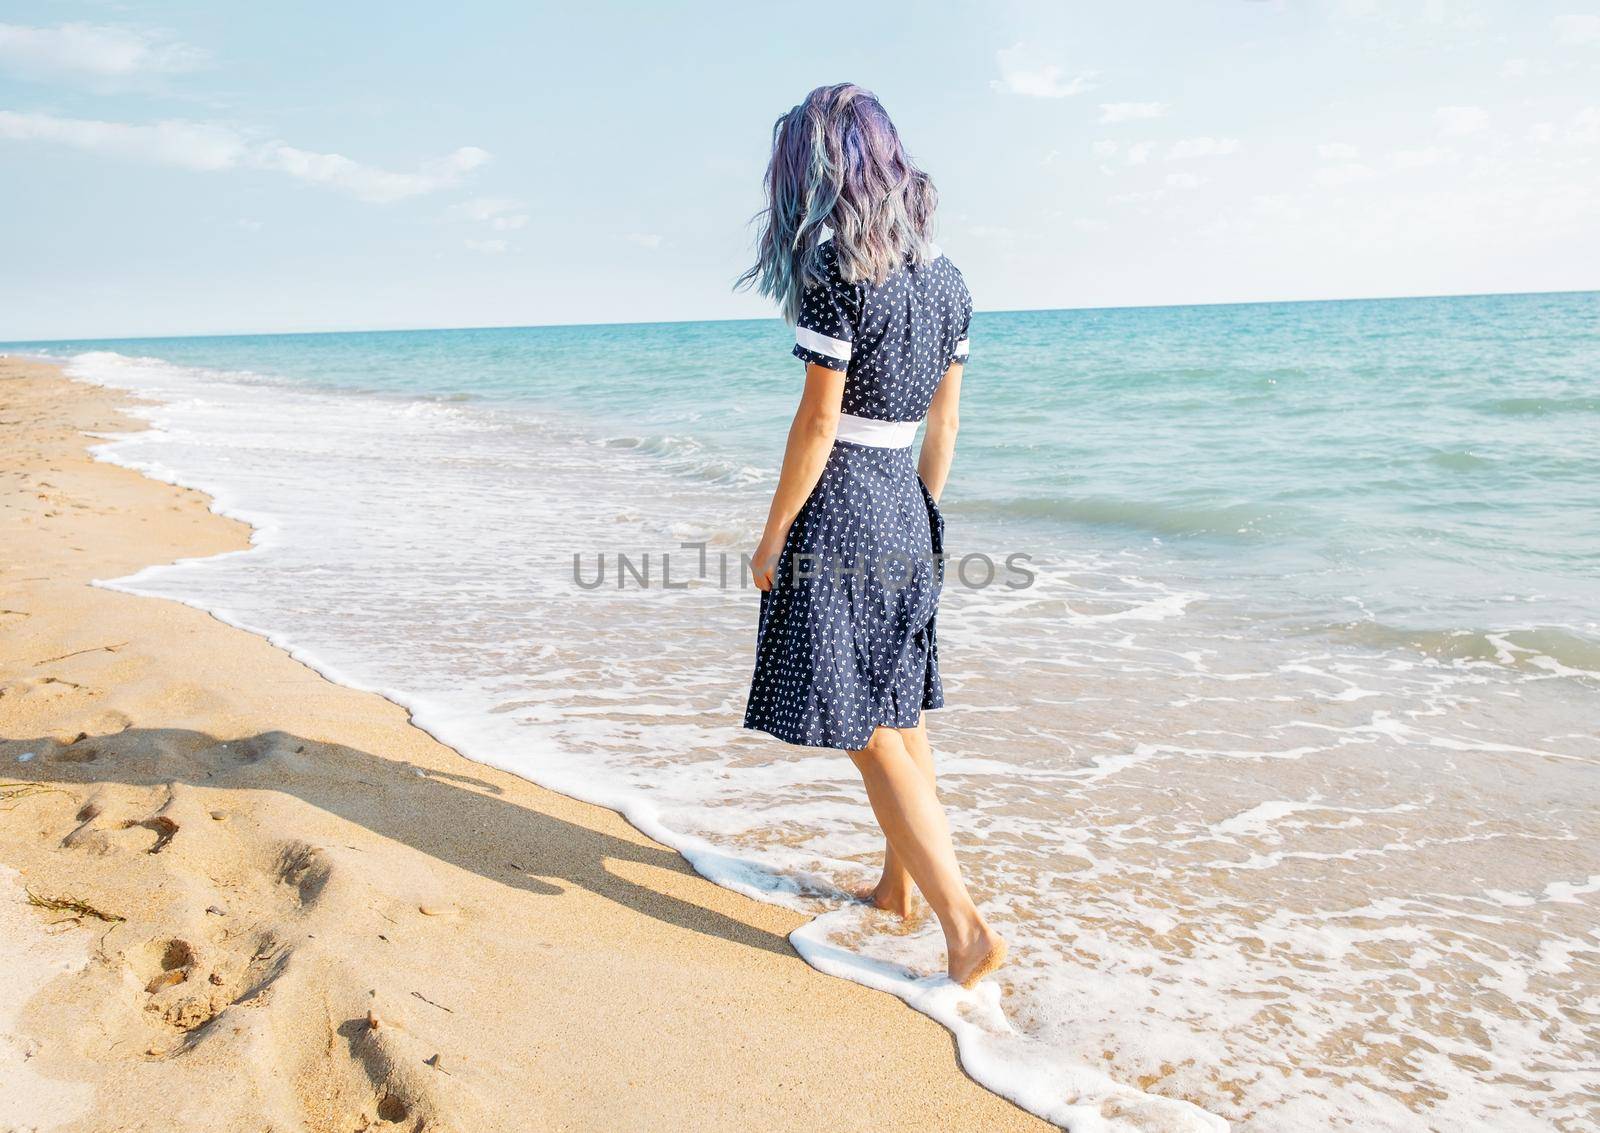 Barefoot young woman walking on shore. by alexAleksei